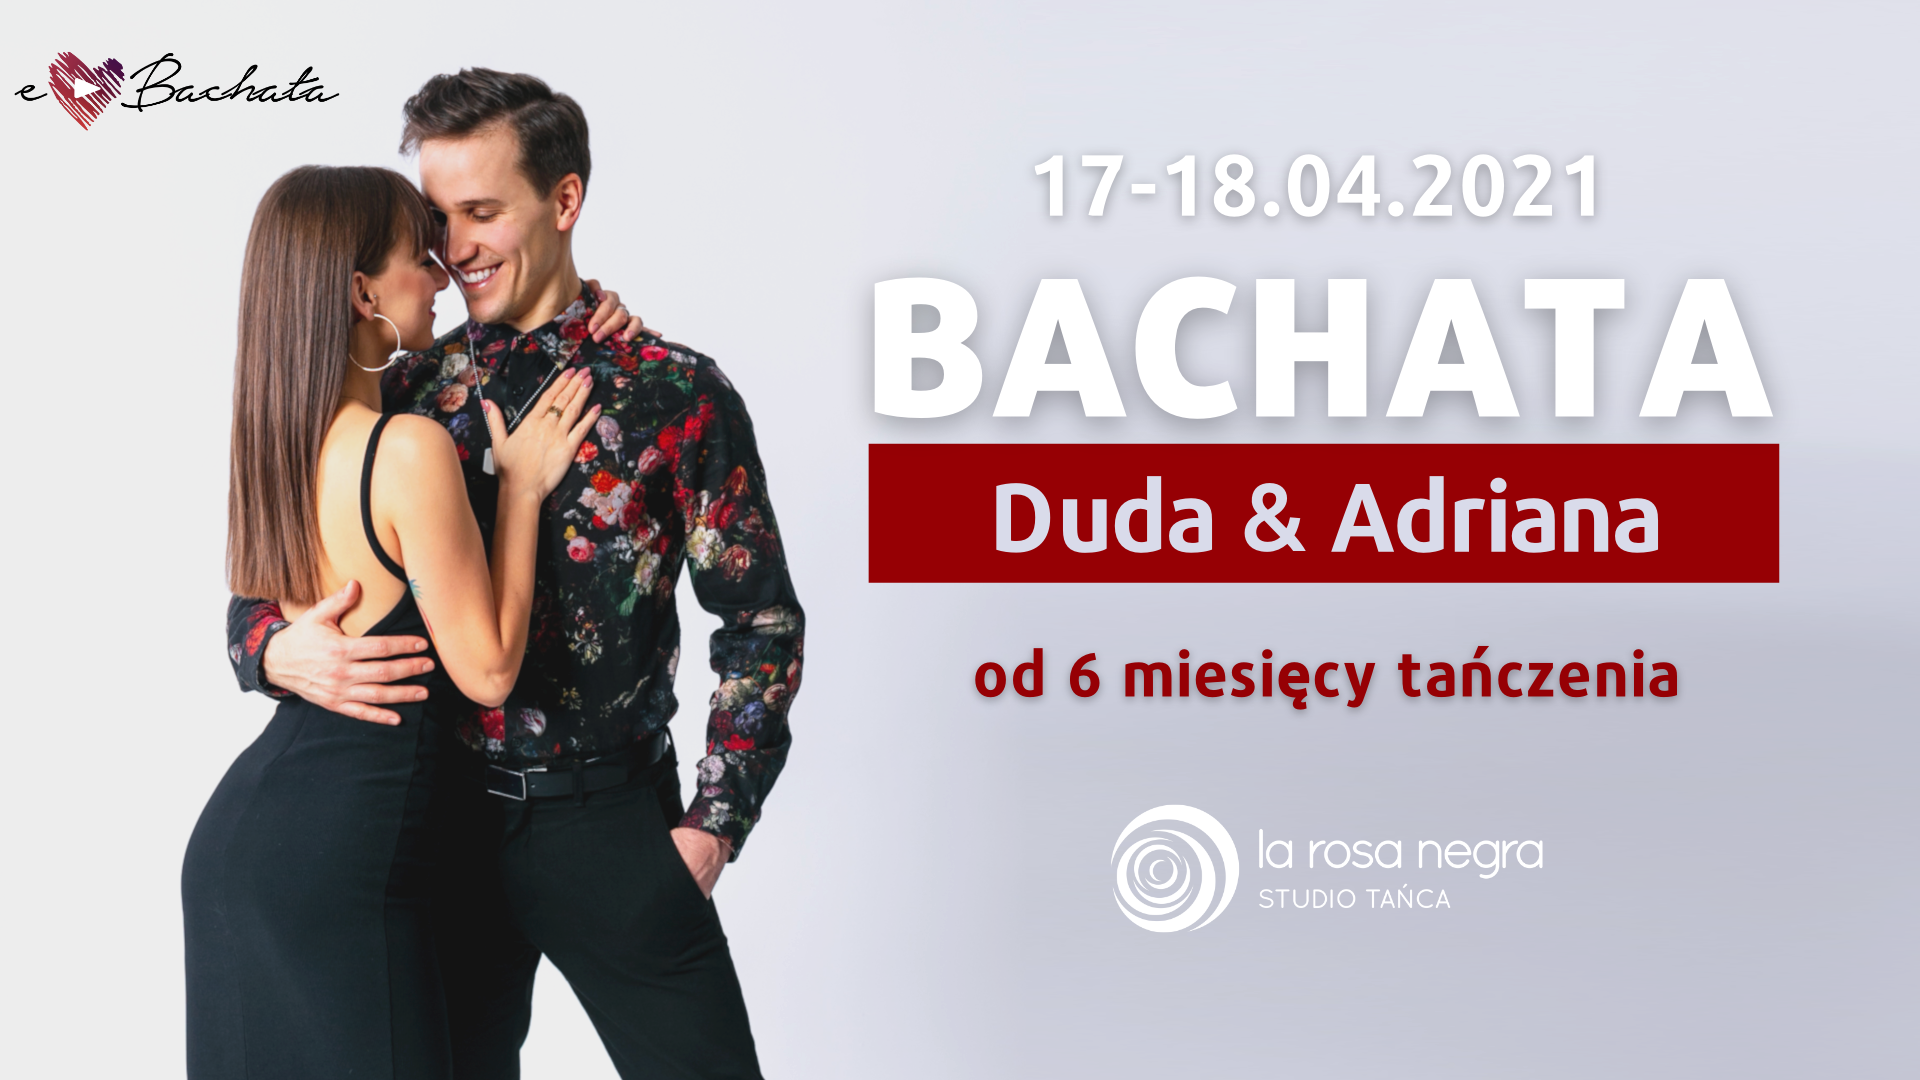 Bachata - Duda & Adriana - zajęcia weekendowe